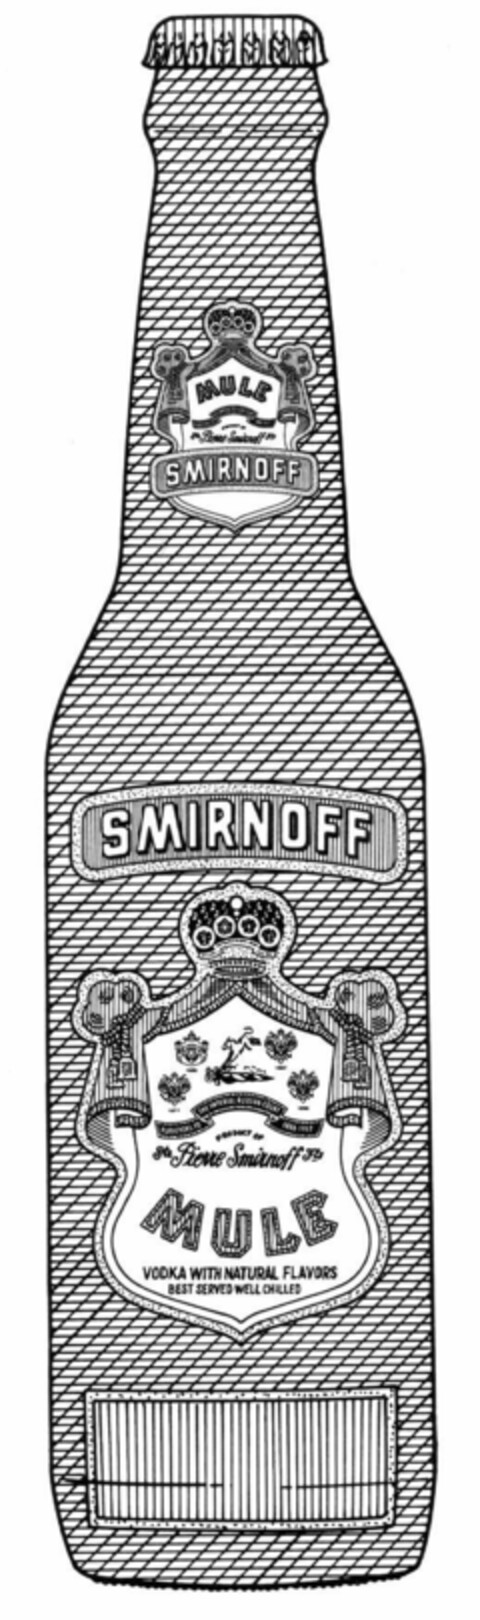 MULE Pierre Smirnoff SMIRNOFF SMIRNOFF PRODUCT OF Pierre Smirnoff MULE VODKA WITH NATURAL FLAVORS BEST SERVED WELL CHILLED Logo (EUIPO, 25.03.1998)